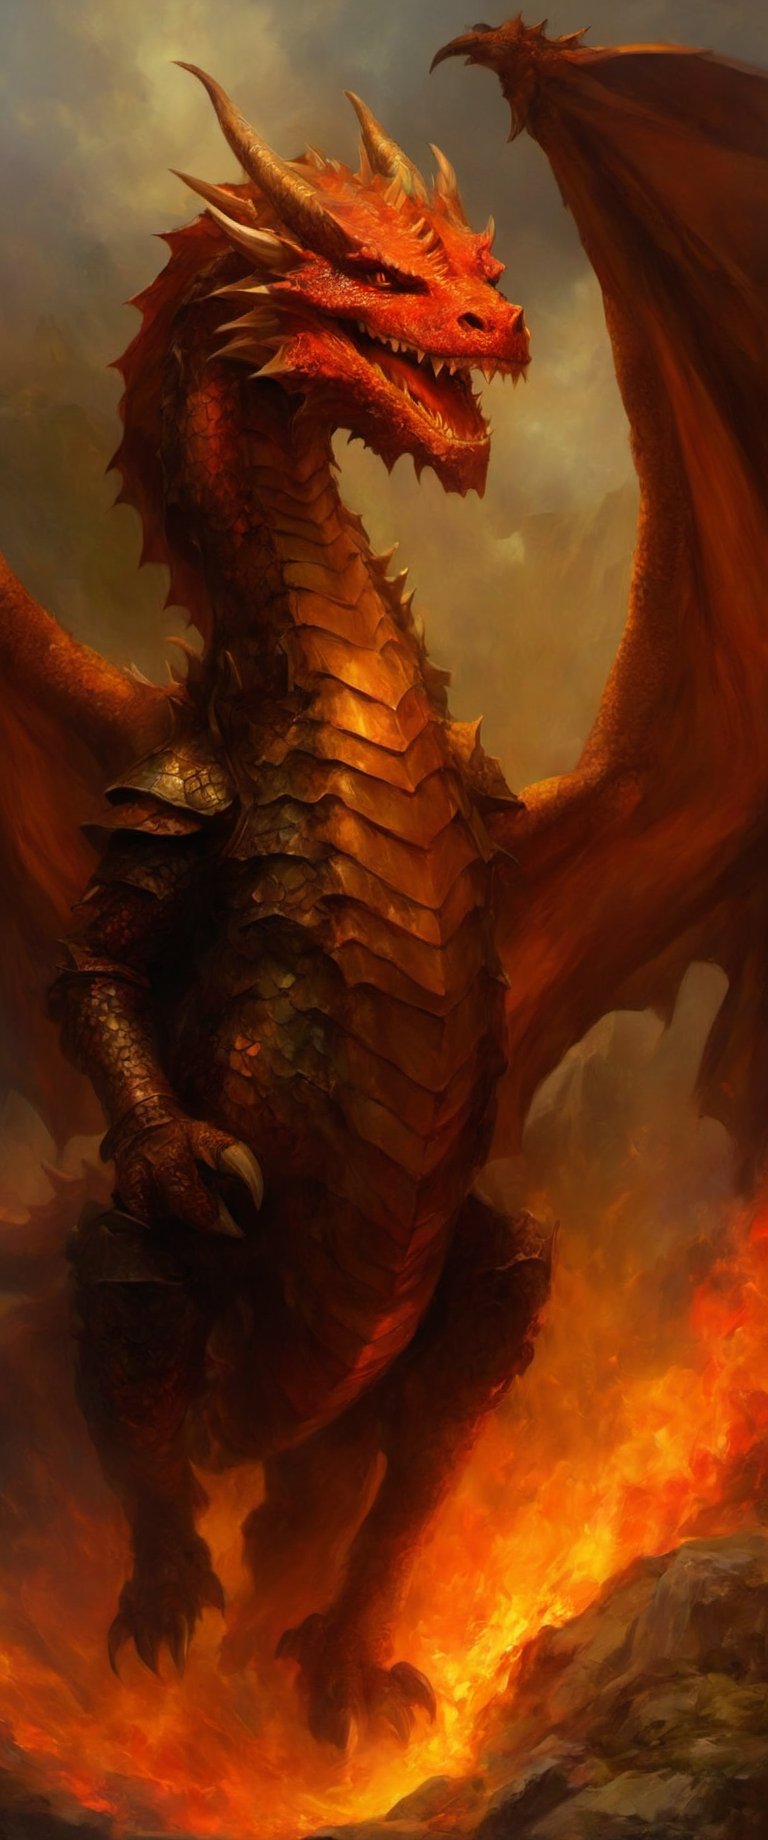 Deception of a medival  dragon slayer. dark, raw,oil paint